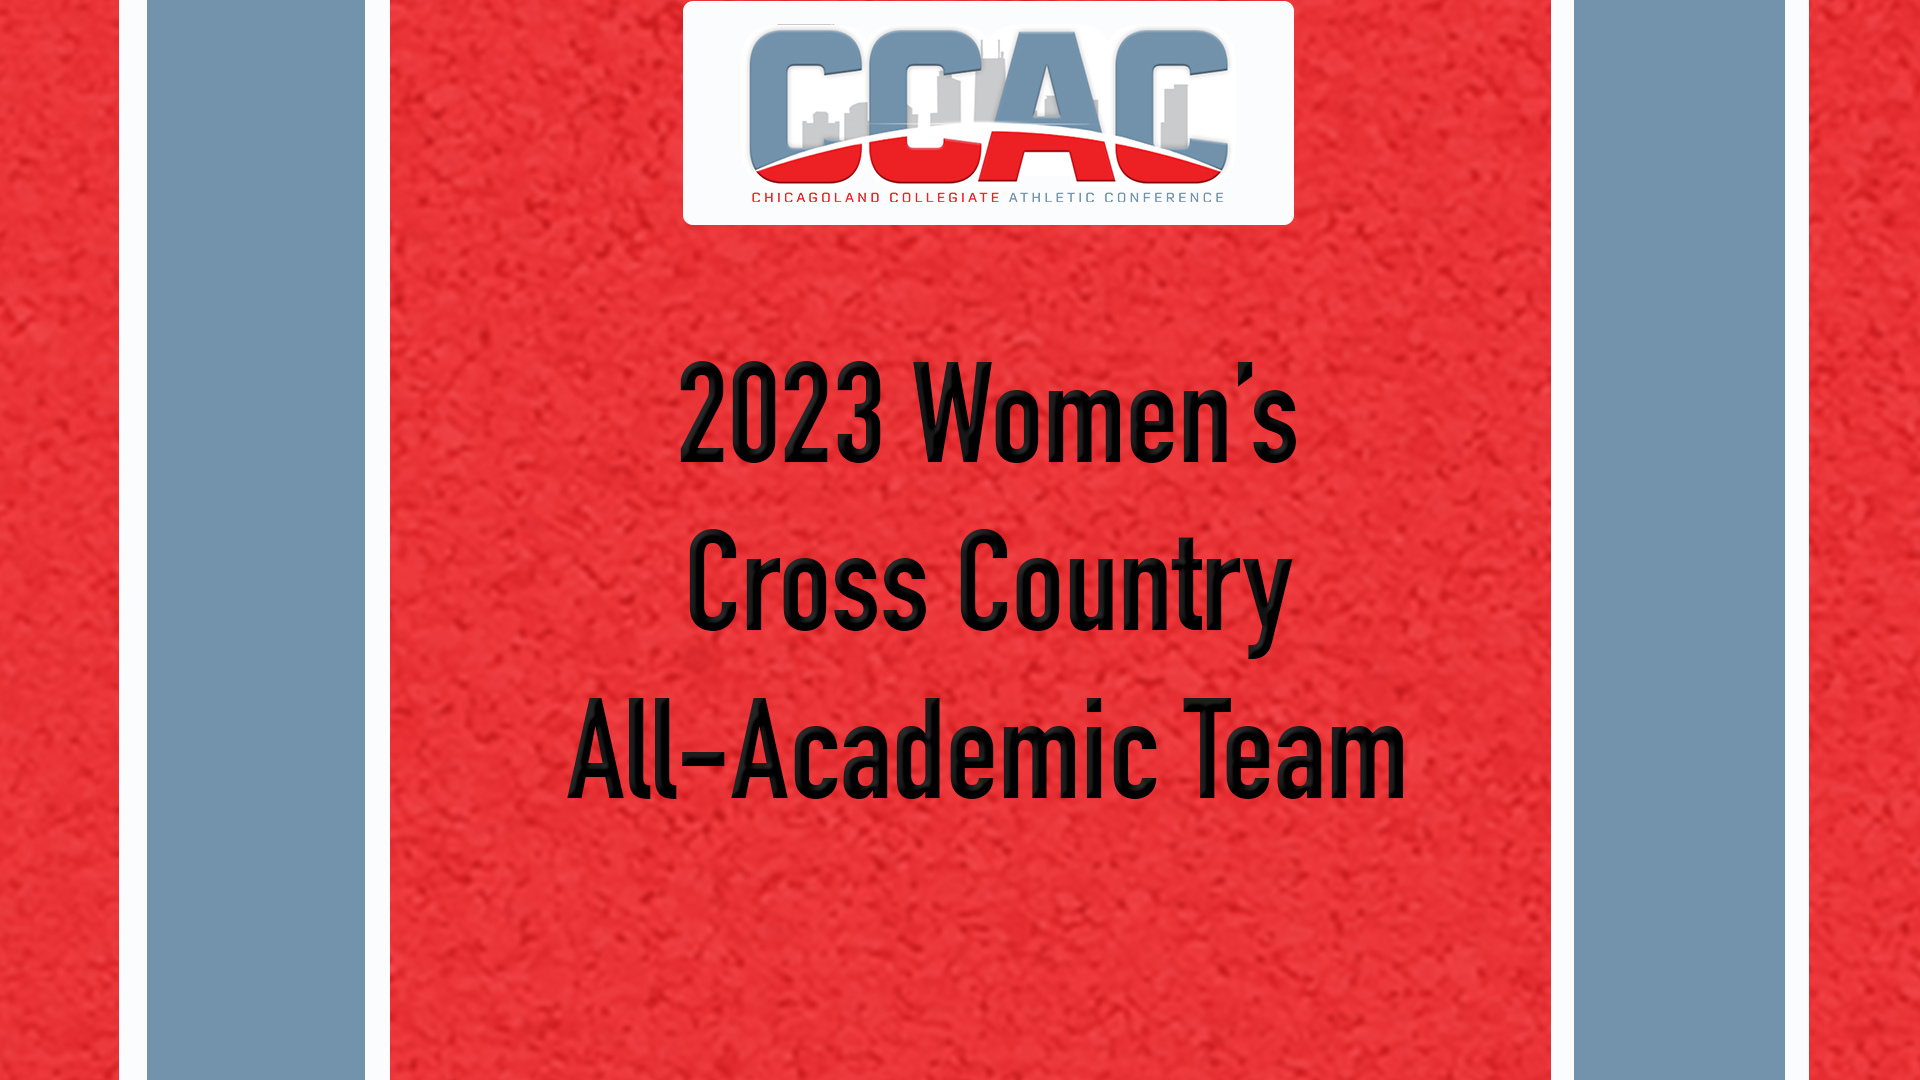 League Office Announces 2023 Women's Cross Country All-Academic Team